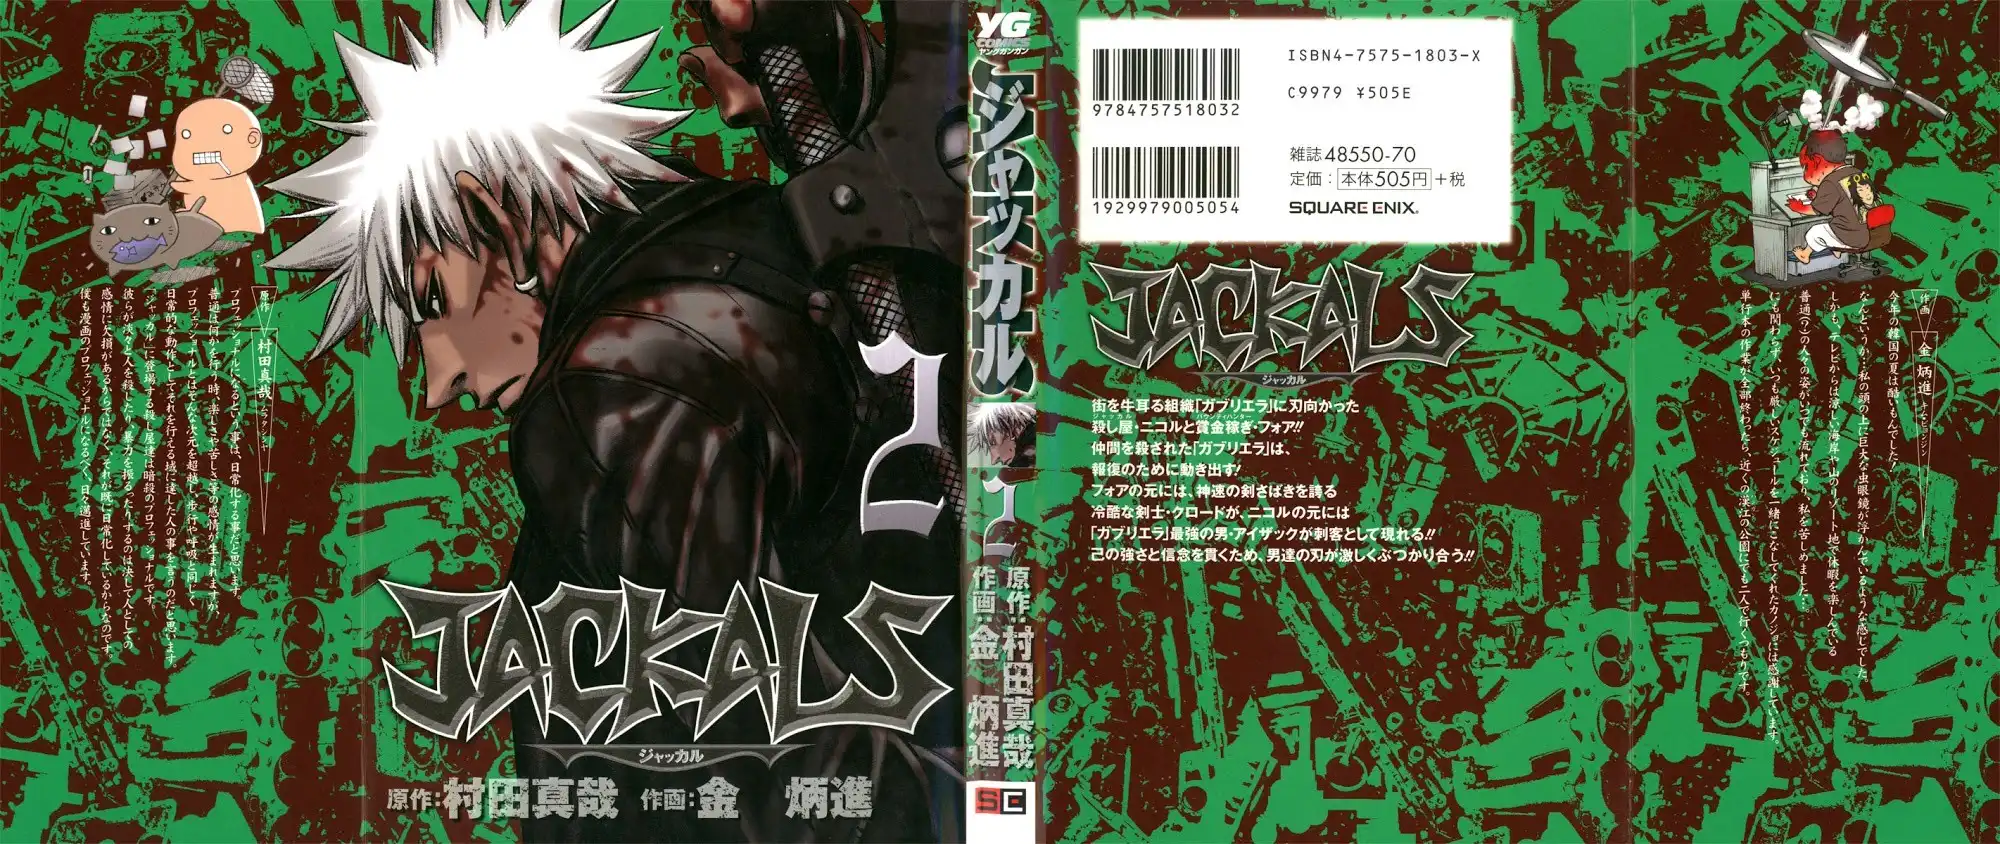 Jackals Chapter 9